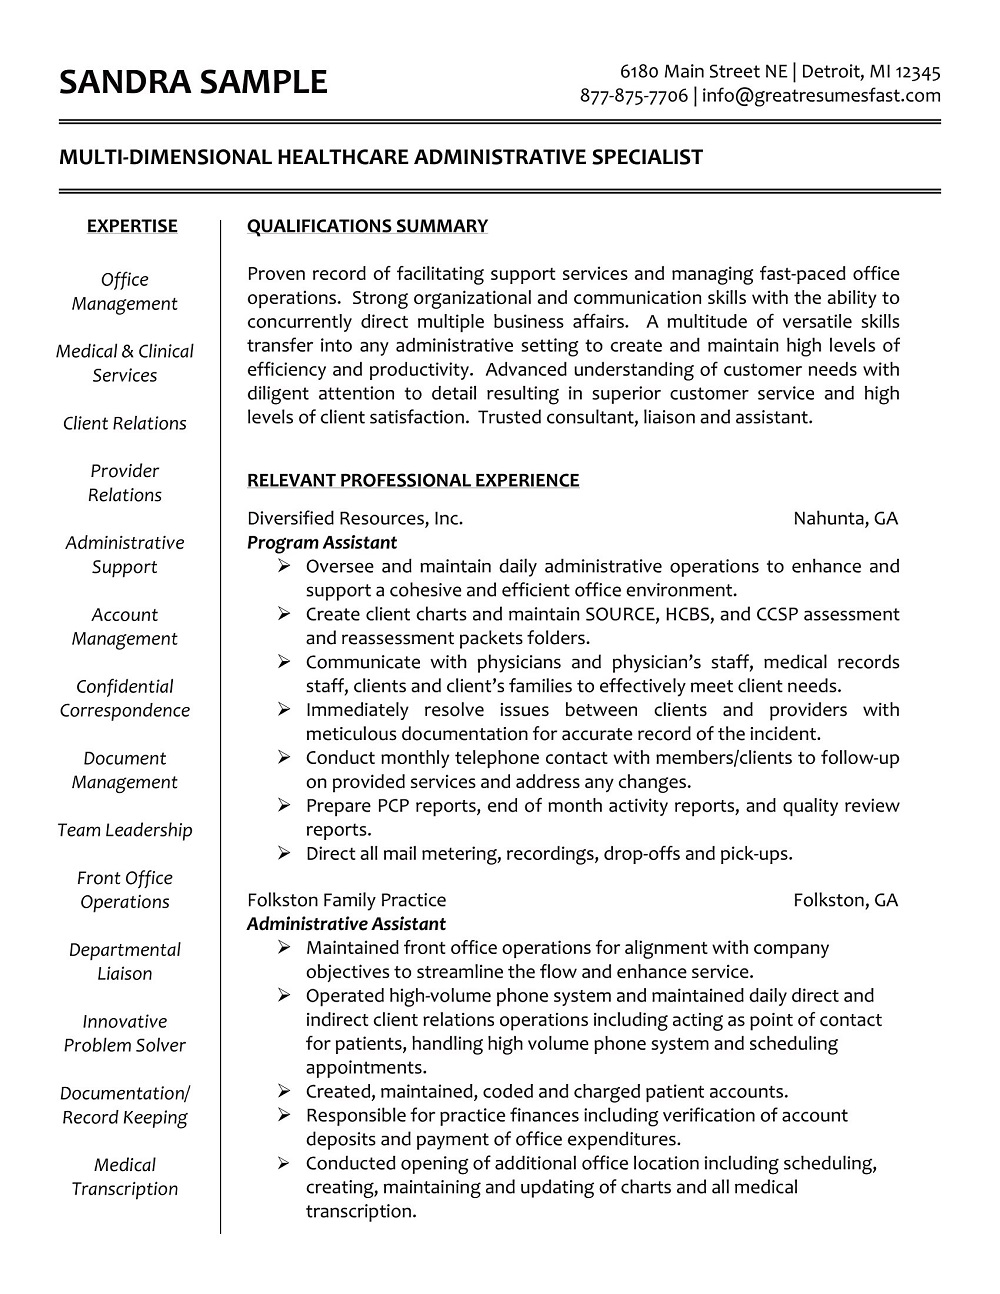 Administrative Resume Samples & Template